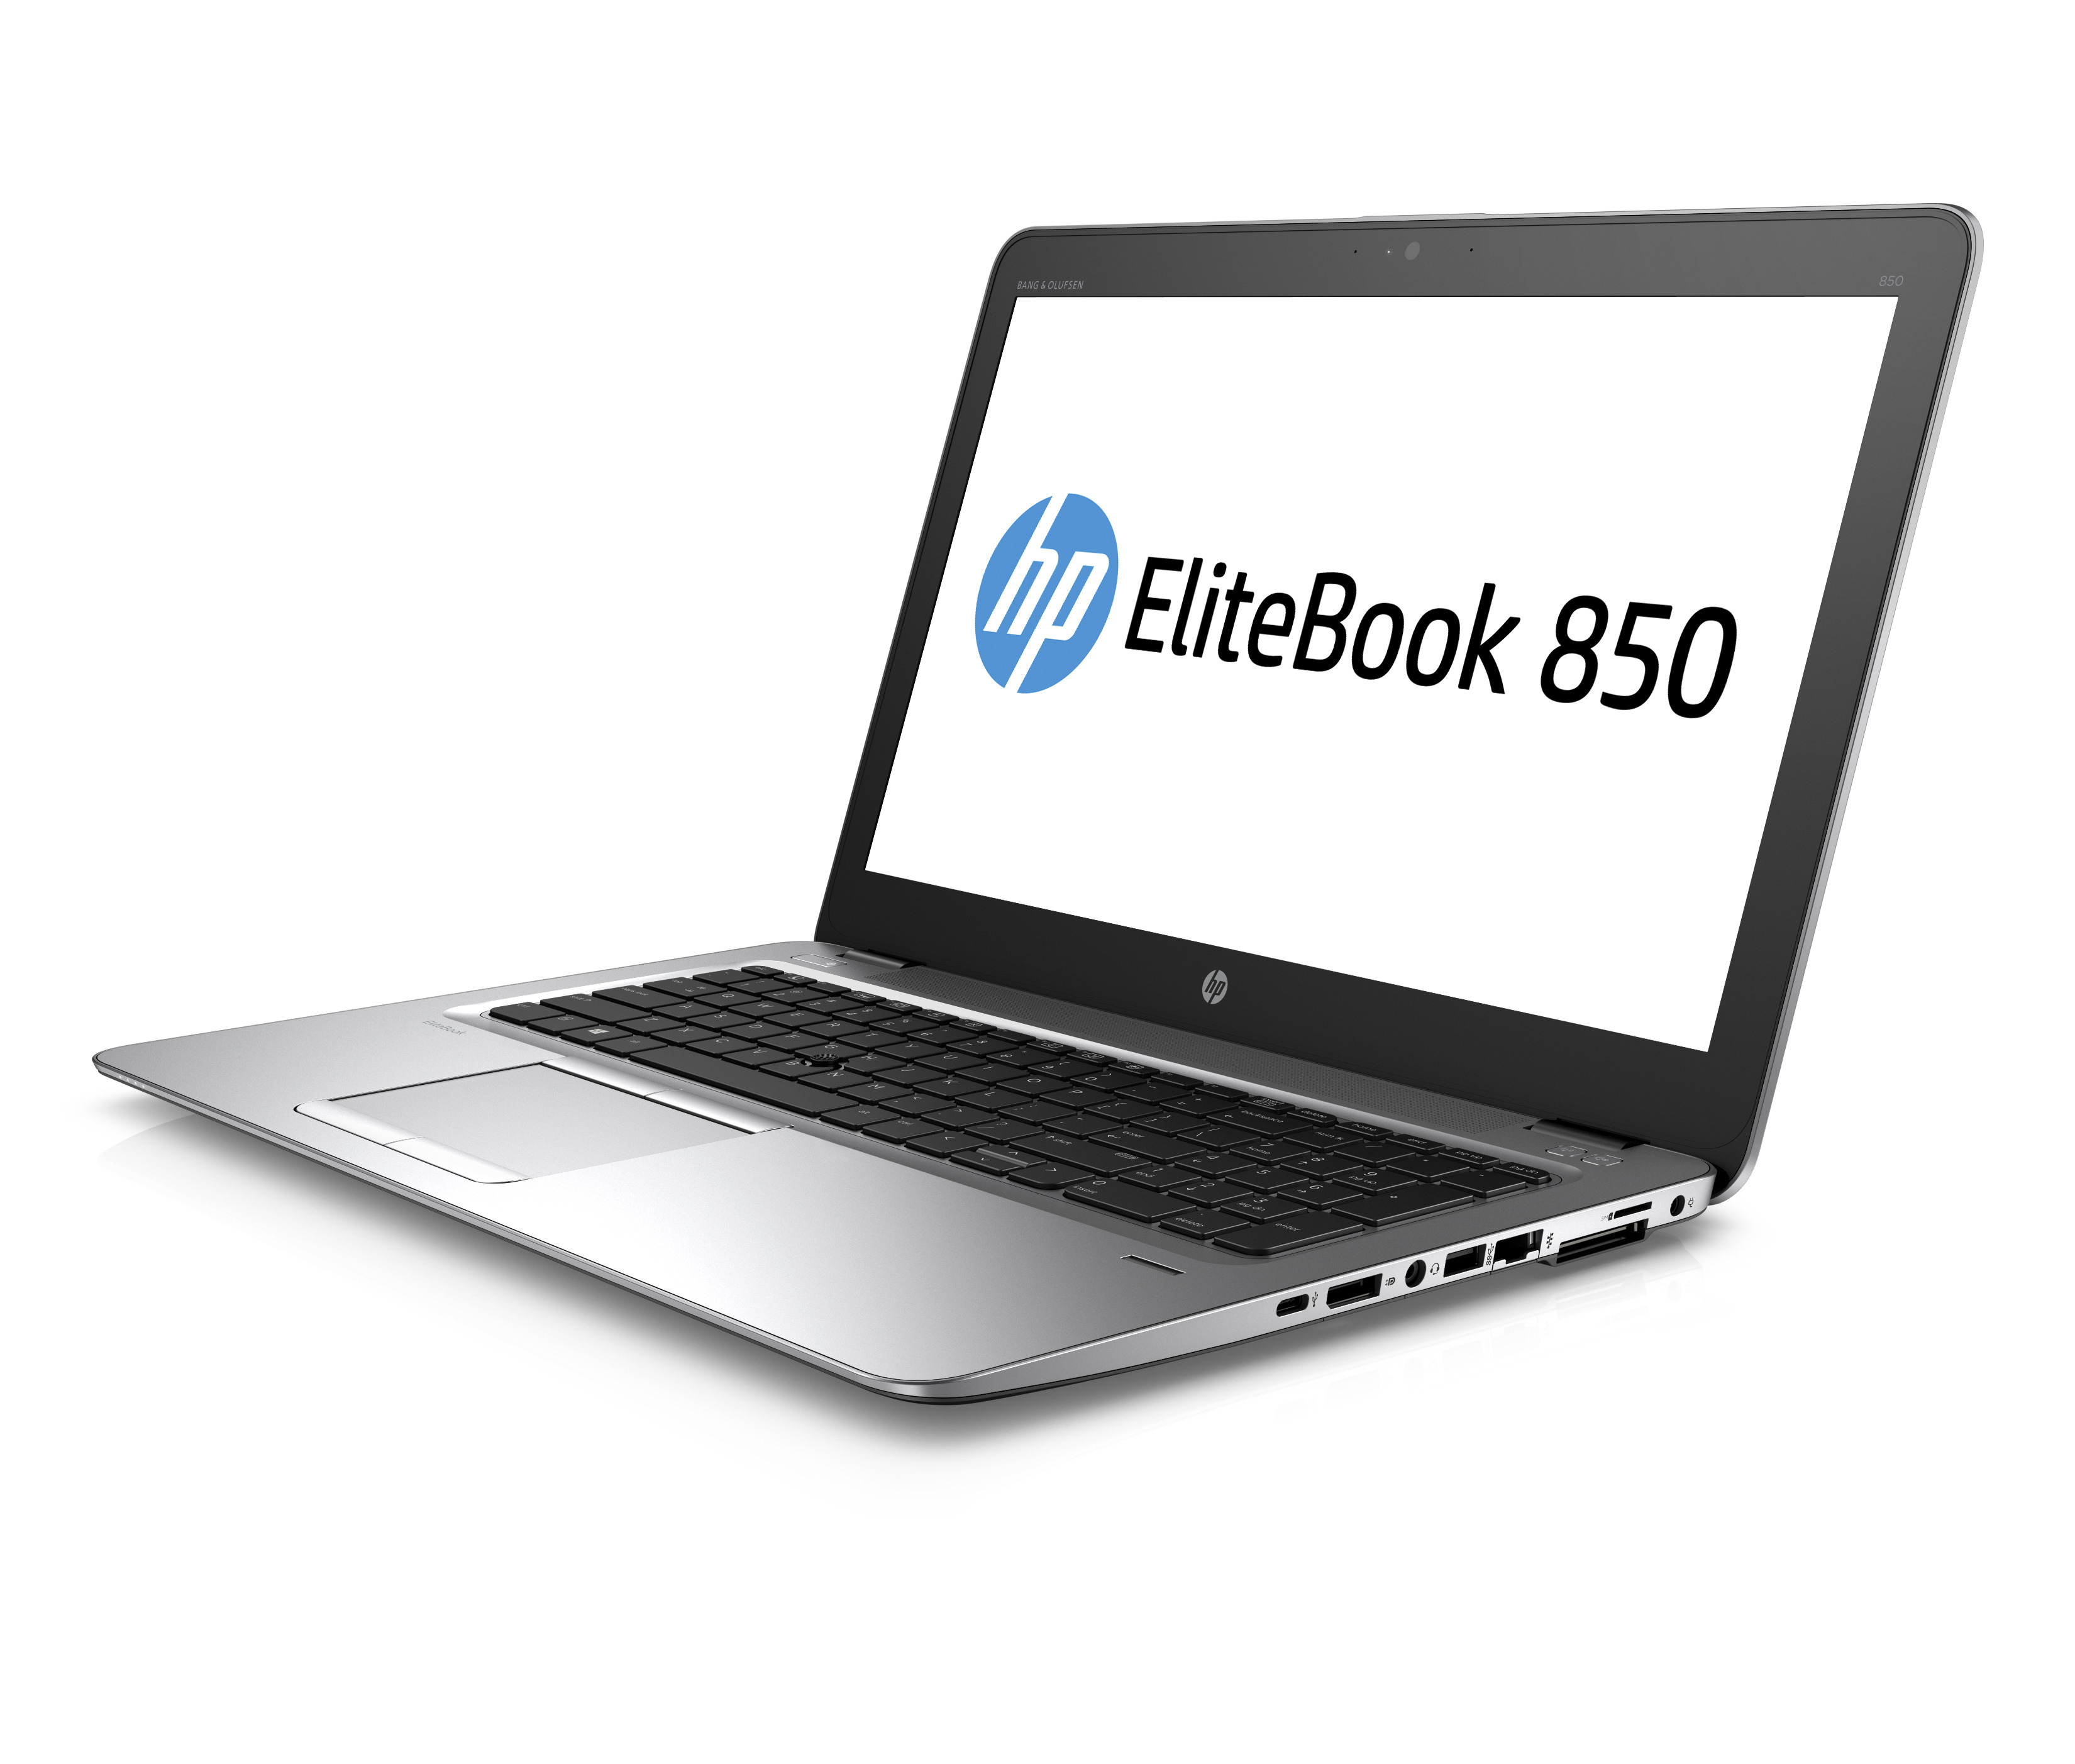 HP EliteBook 850 G3 - Втора употреба - 80106362 на топ цена - 80106362 ...